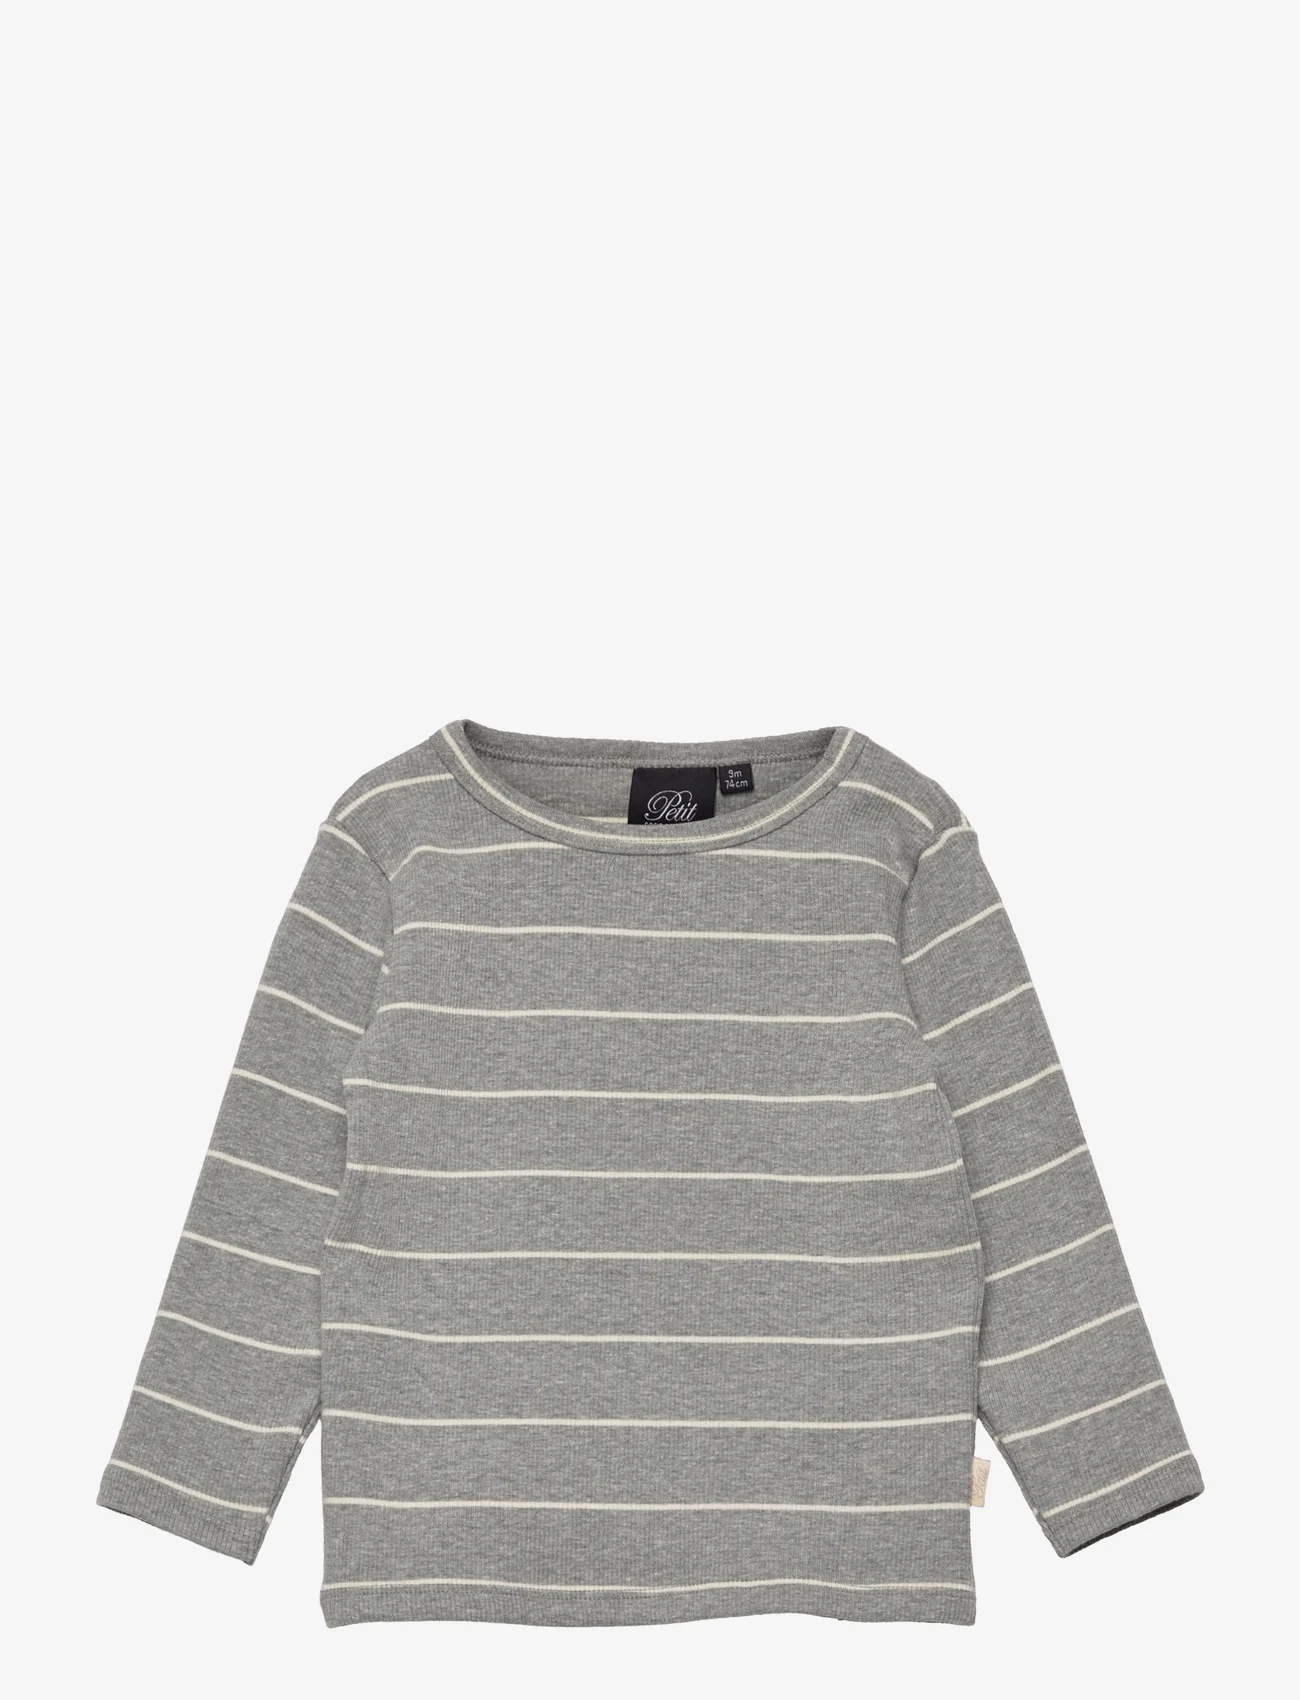 Sofie Schnoor Baby and Kids - T-shirt long-sleeve - langermede t-skjorter - grey melange - 0